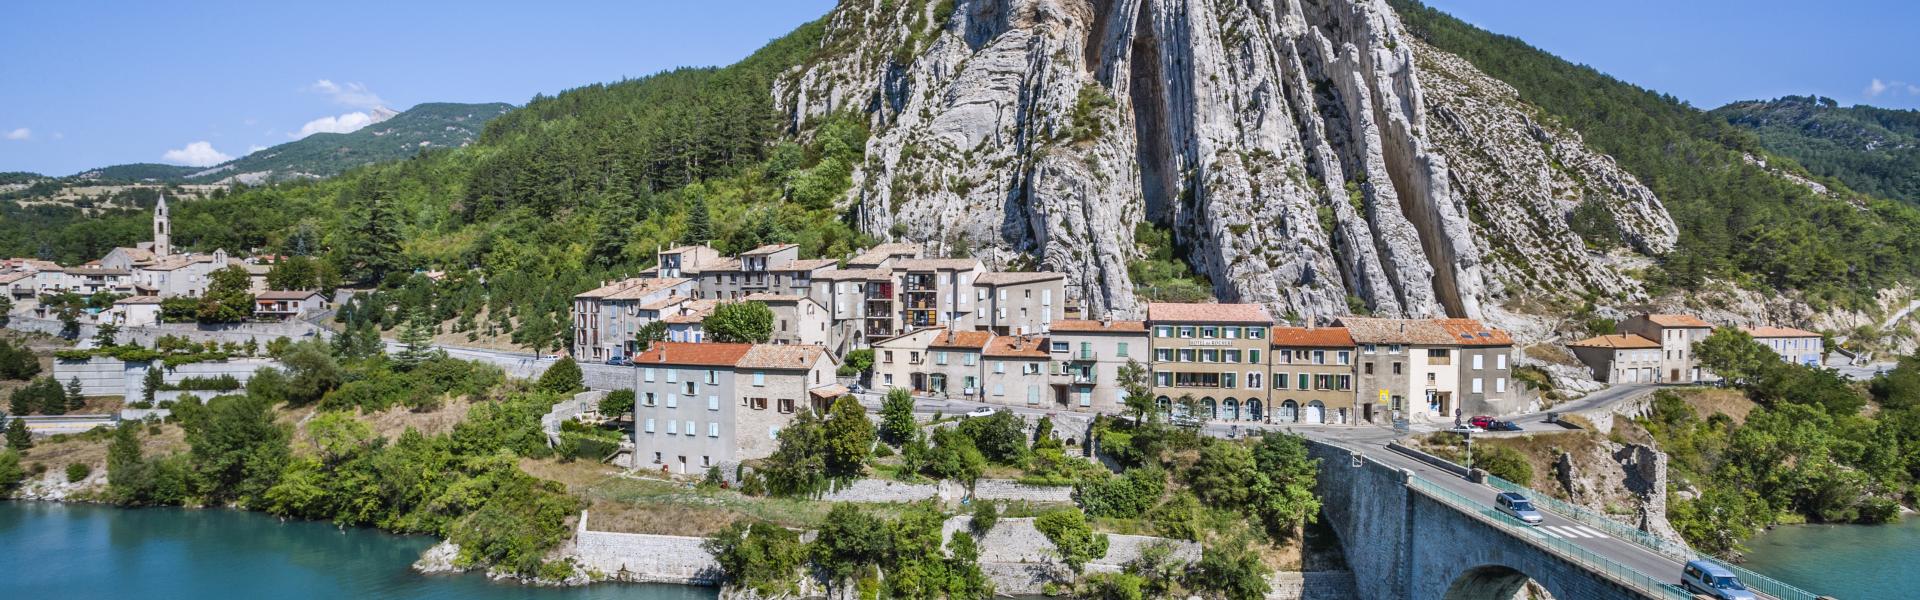 France, Alpes-de-Haute-Provence, Sisteron, view of the vertical limestone strata of Le Rocher de la Baume, across La Durance River.